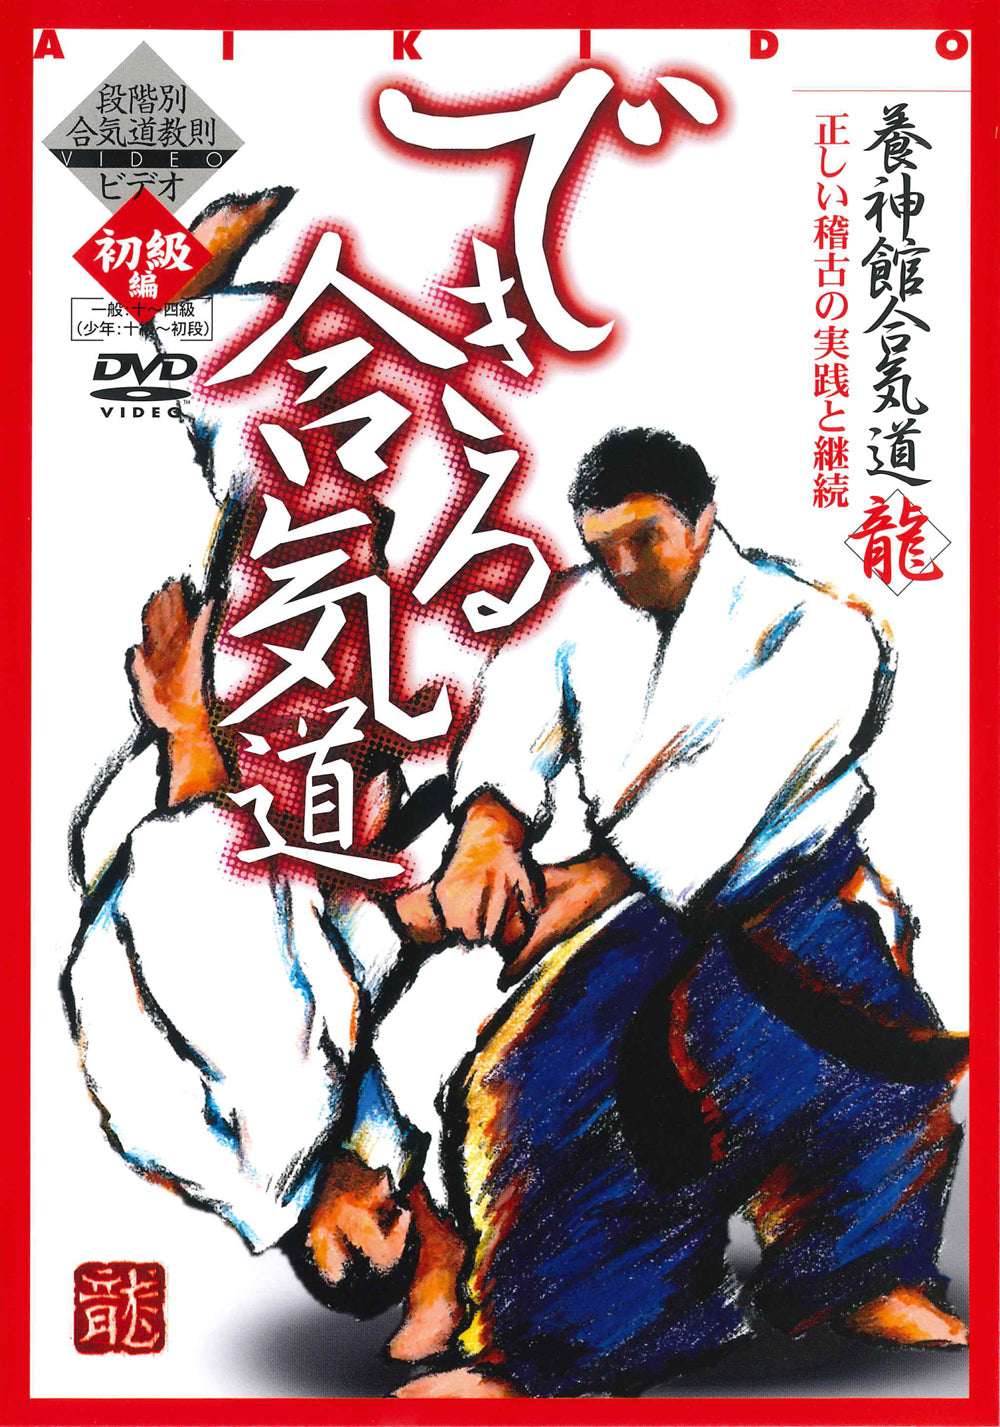 Advanced Level Aikido DVD by Tsuneo Ando